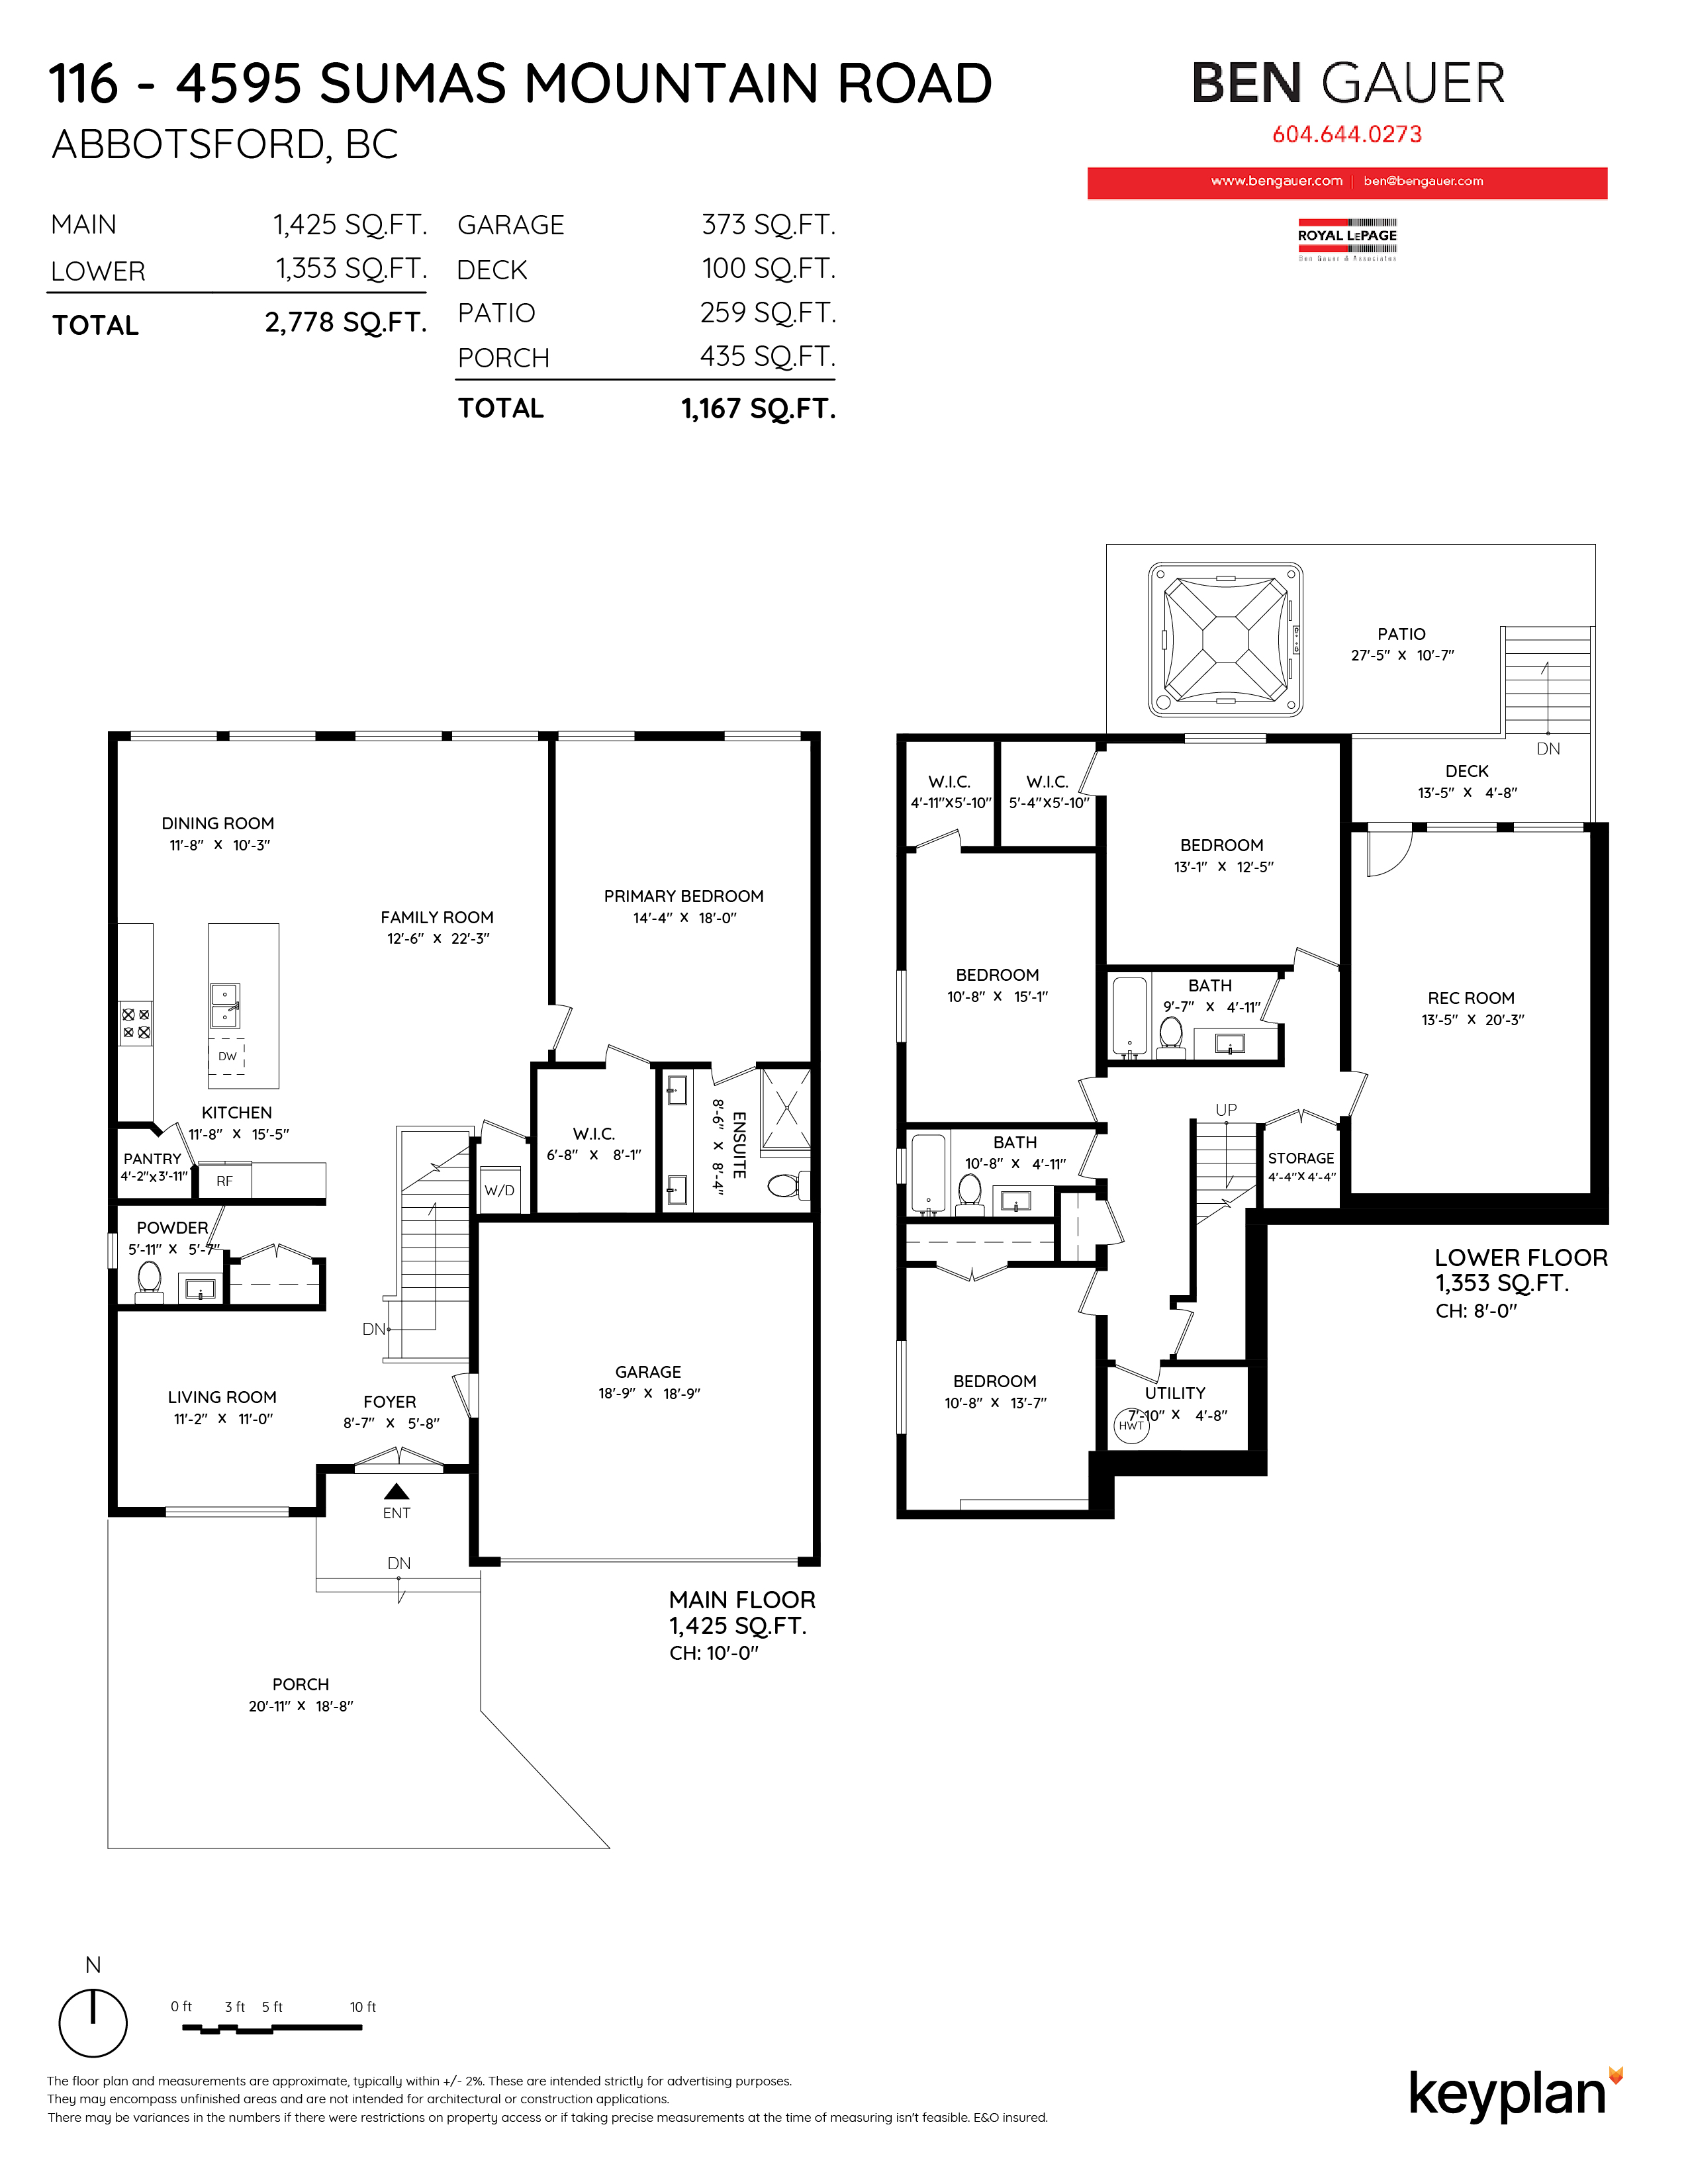 Ben Gauer - Unit 116 - 4595 Sumas Mountain Road, Abbotsford, BC, Canada | Floor Plan 1